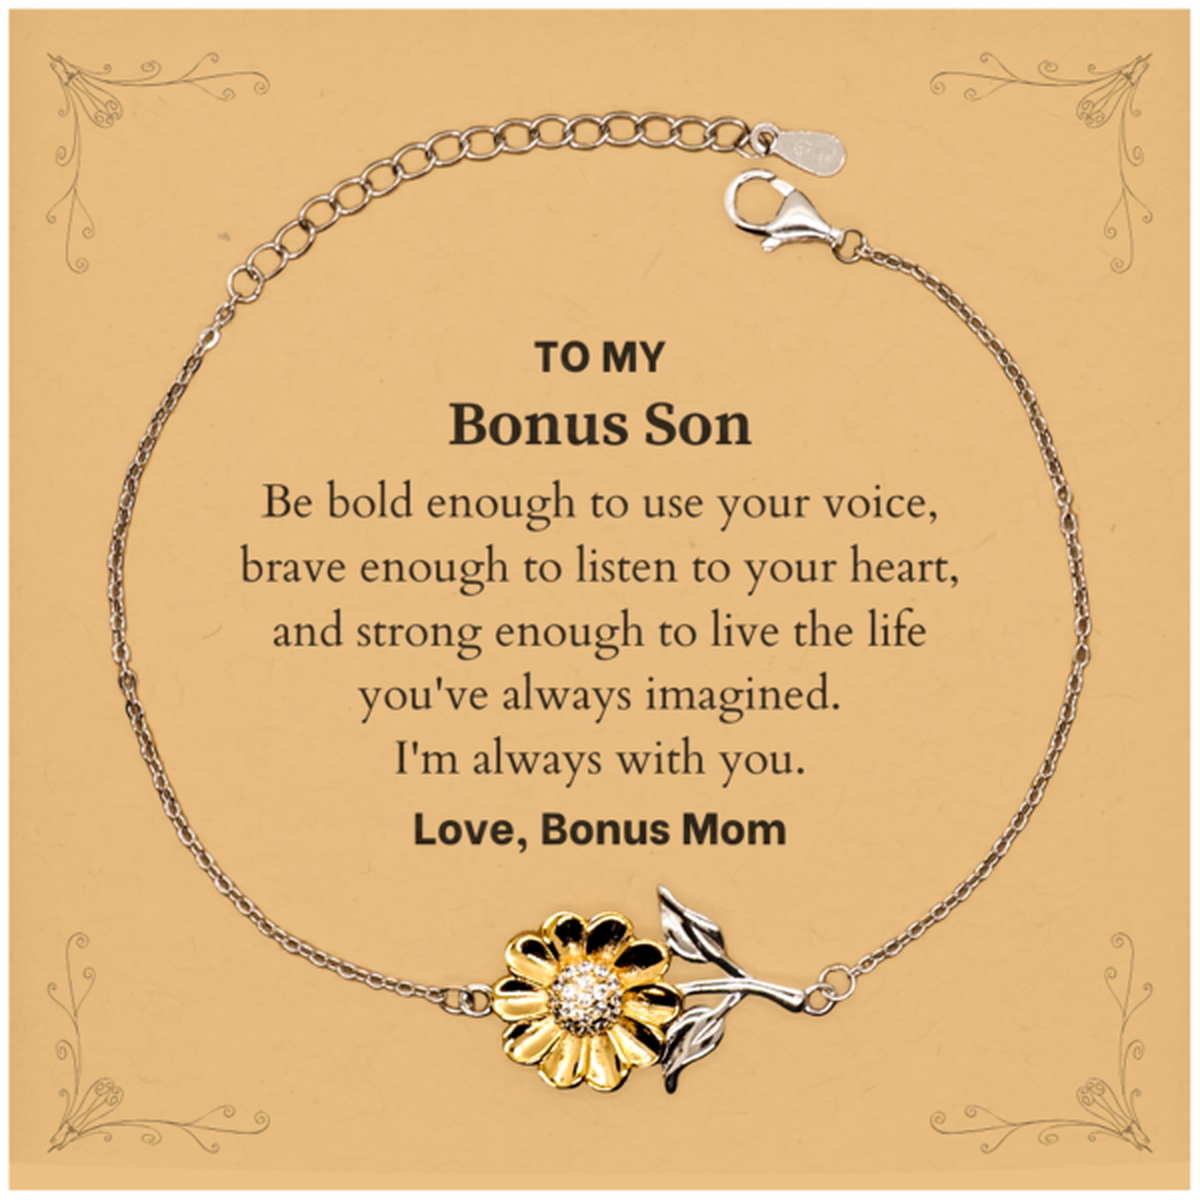 Keepsake Bonus Son Sunflower Bracelet Gift Idea Graduation Christmas Birthday Bonus Son from Bonus Mom, Bonus Son Be bold enough to use your voice, brave enough to listen to your heart. Love, Bonus Mom